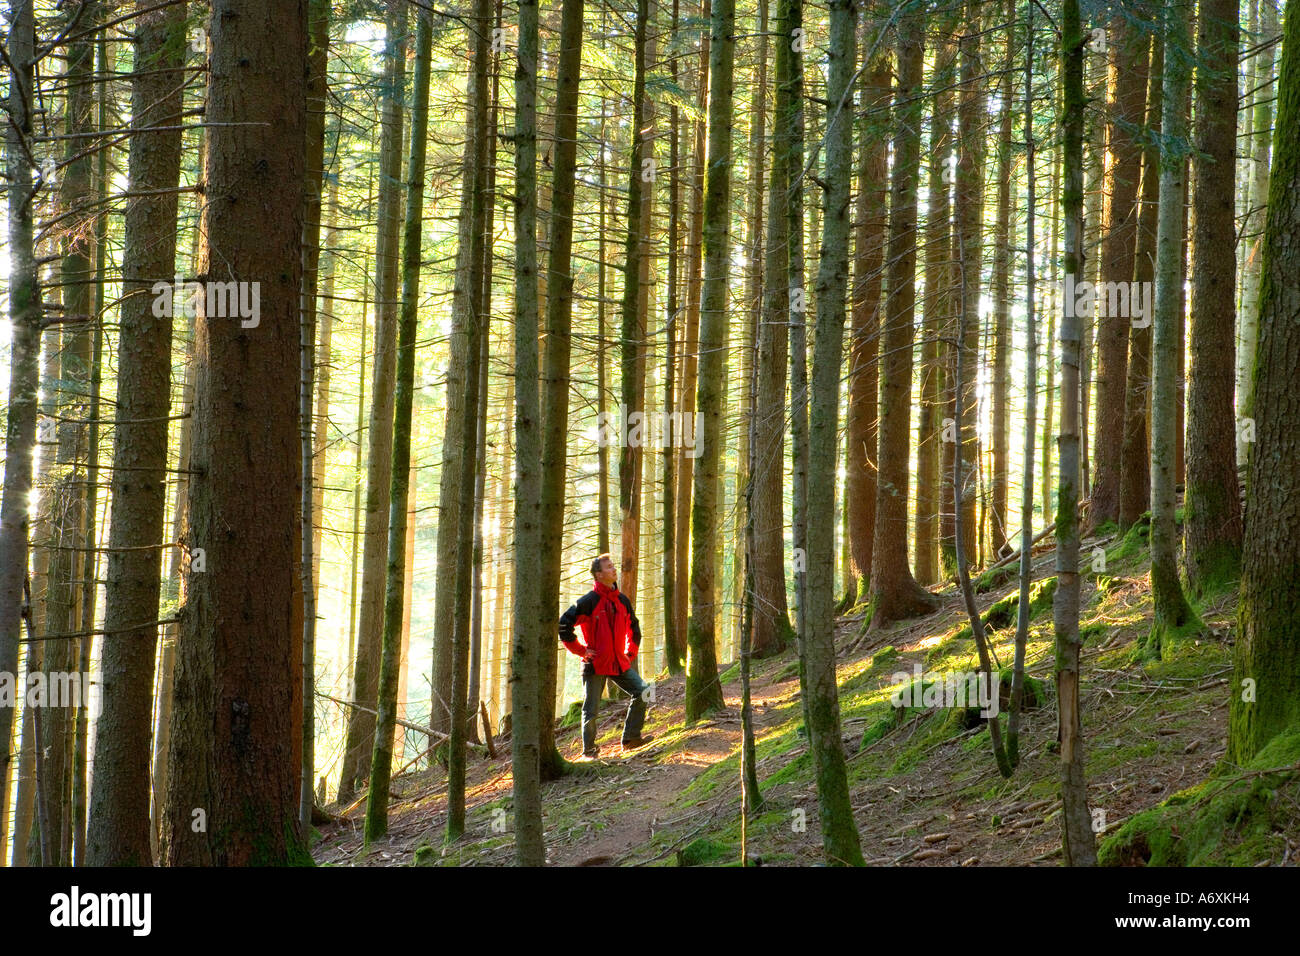 Switzerland Berner Oberland Hiker in Pine Forest Stock Photo